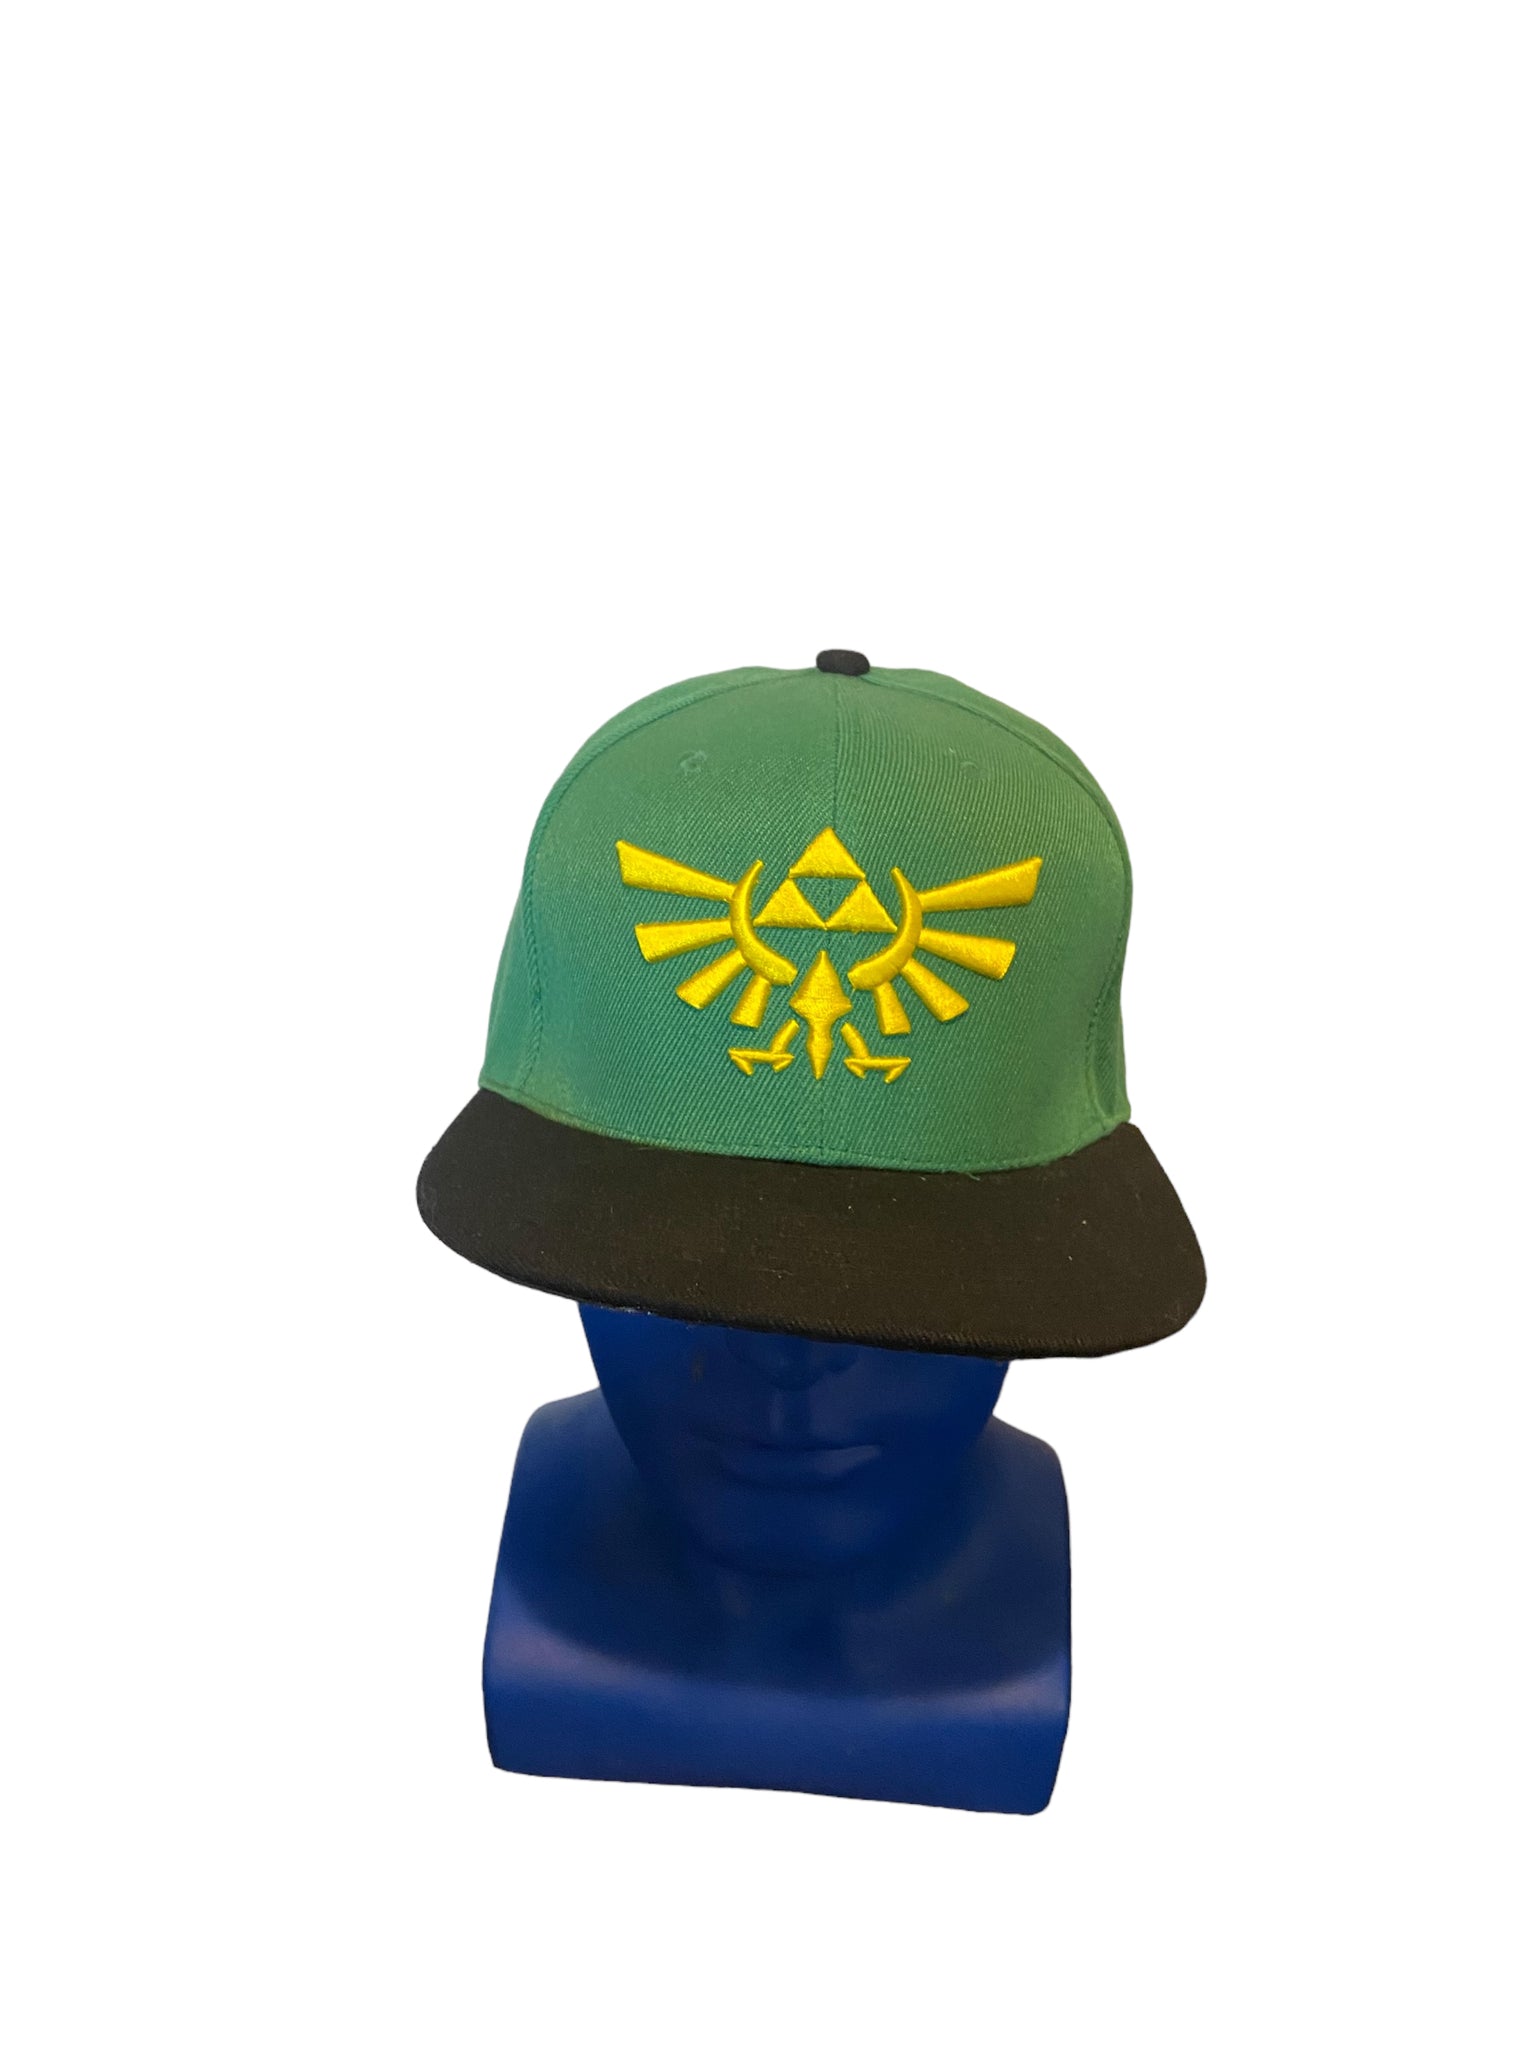 THE LEGEND OF ZELDA SNAPBACK HAT Triforce Logo Green&Yellow Flat-Bill Men/Women